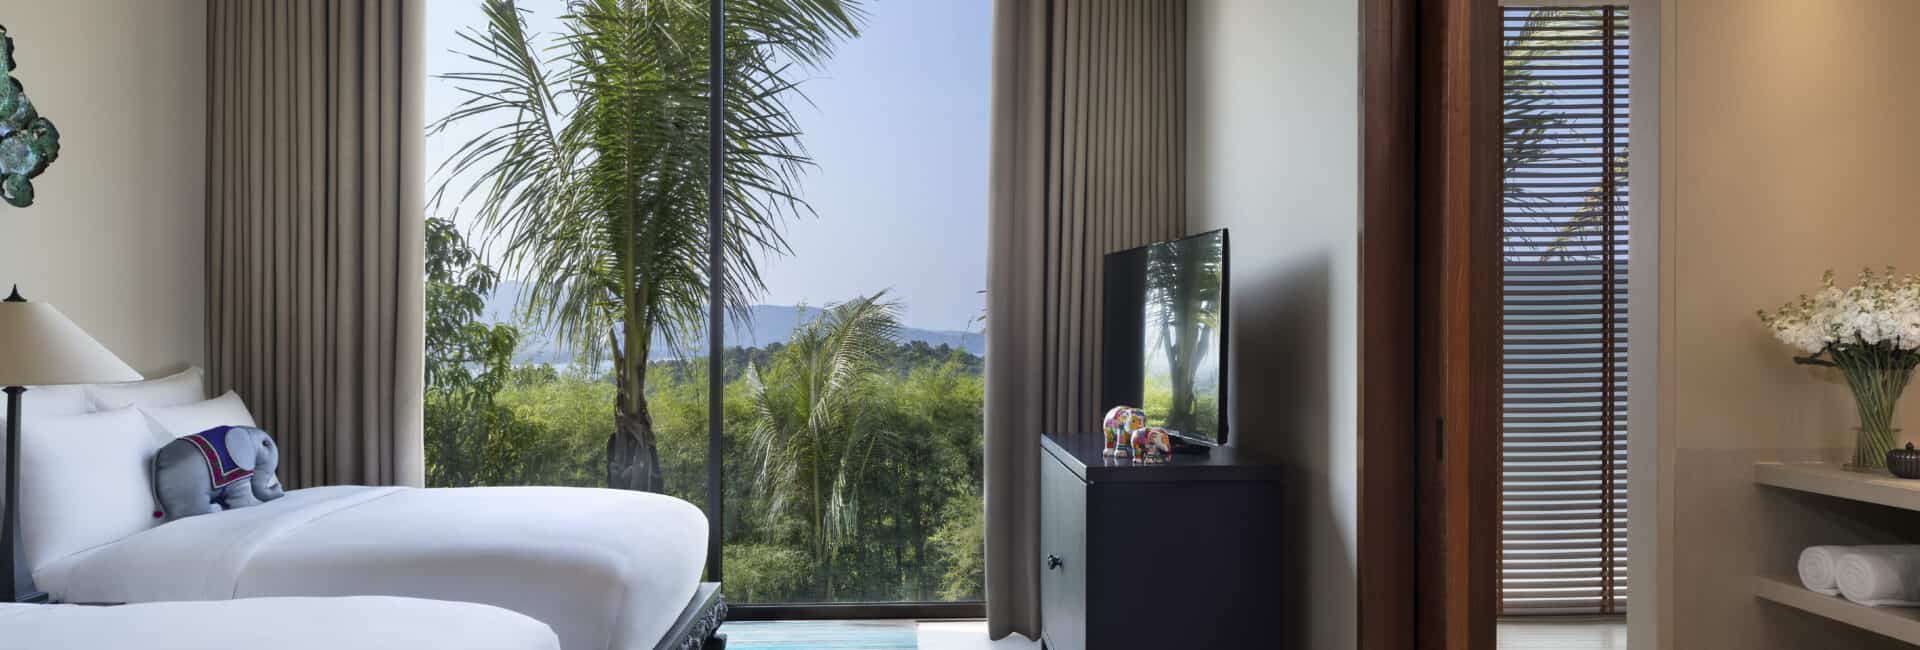 Anantara Layan Phuket Resort - Guest Room